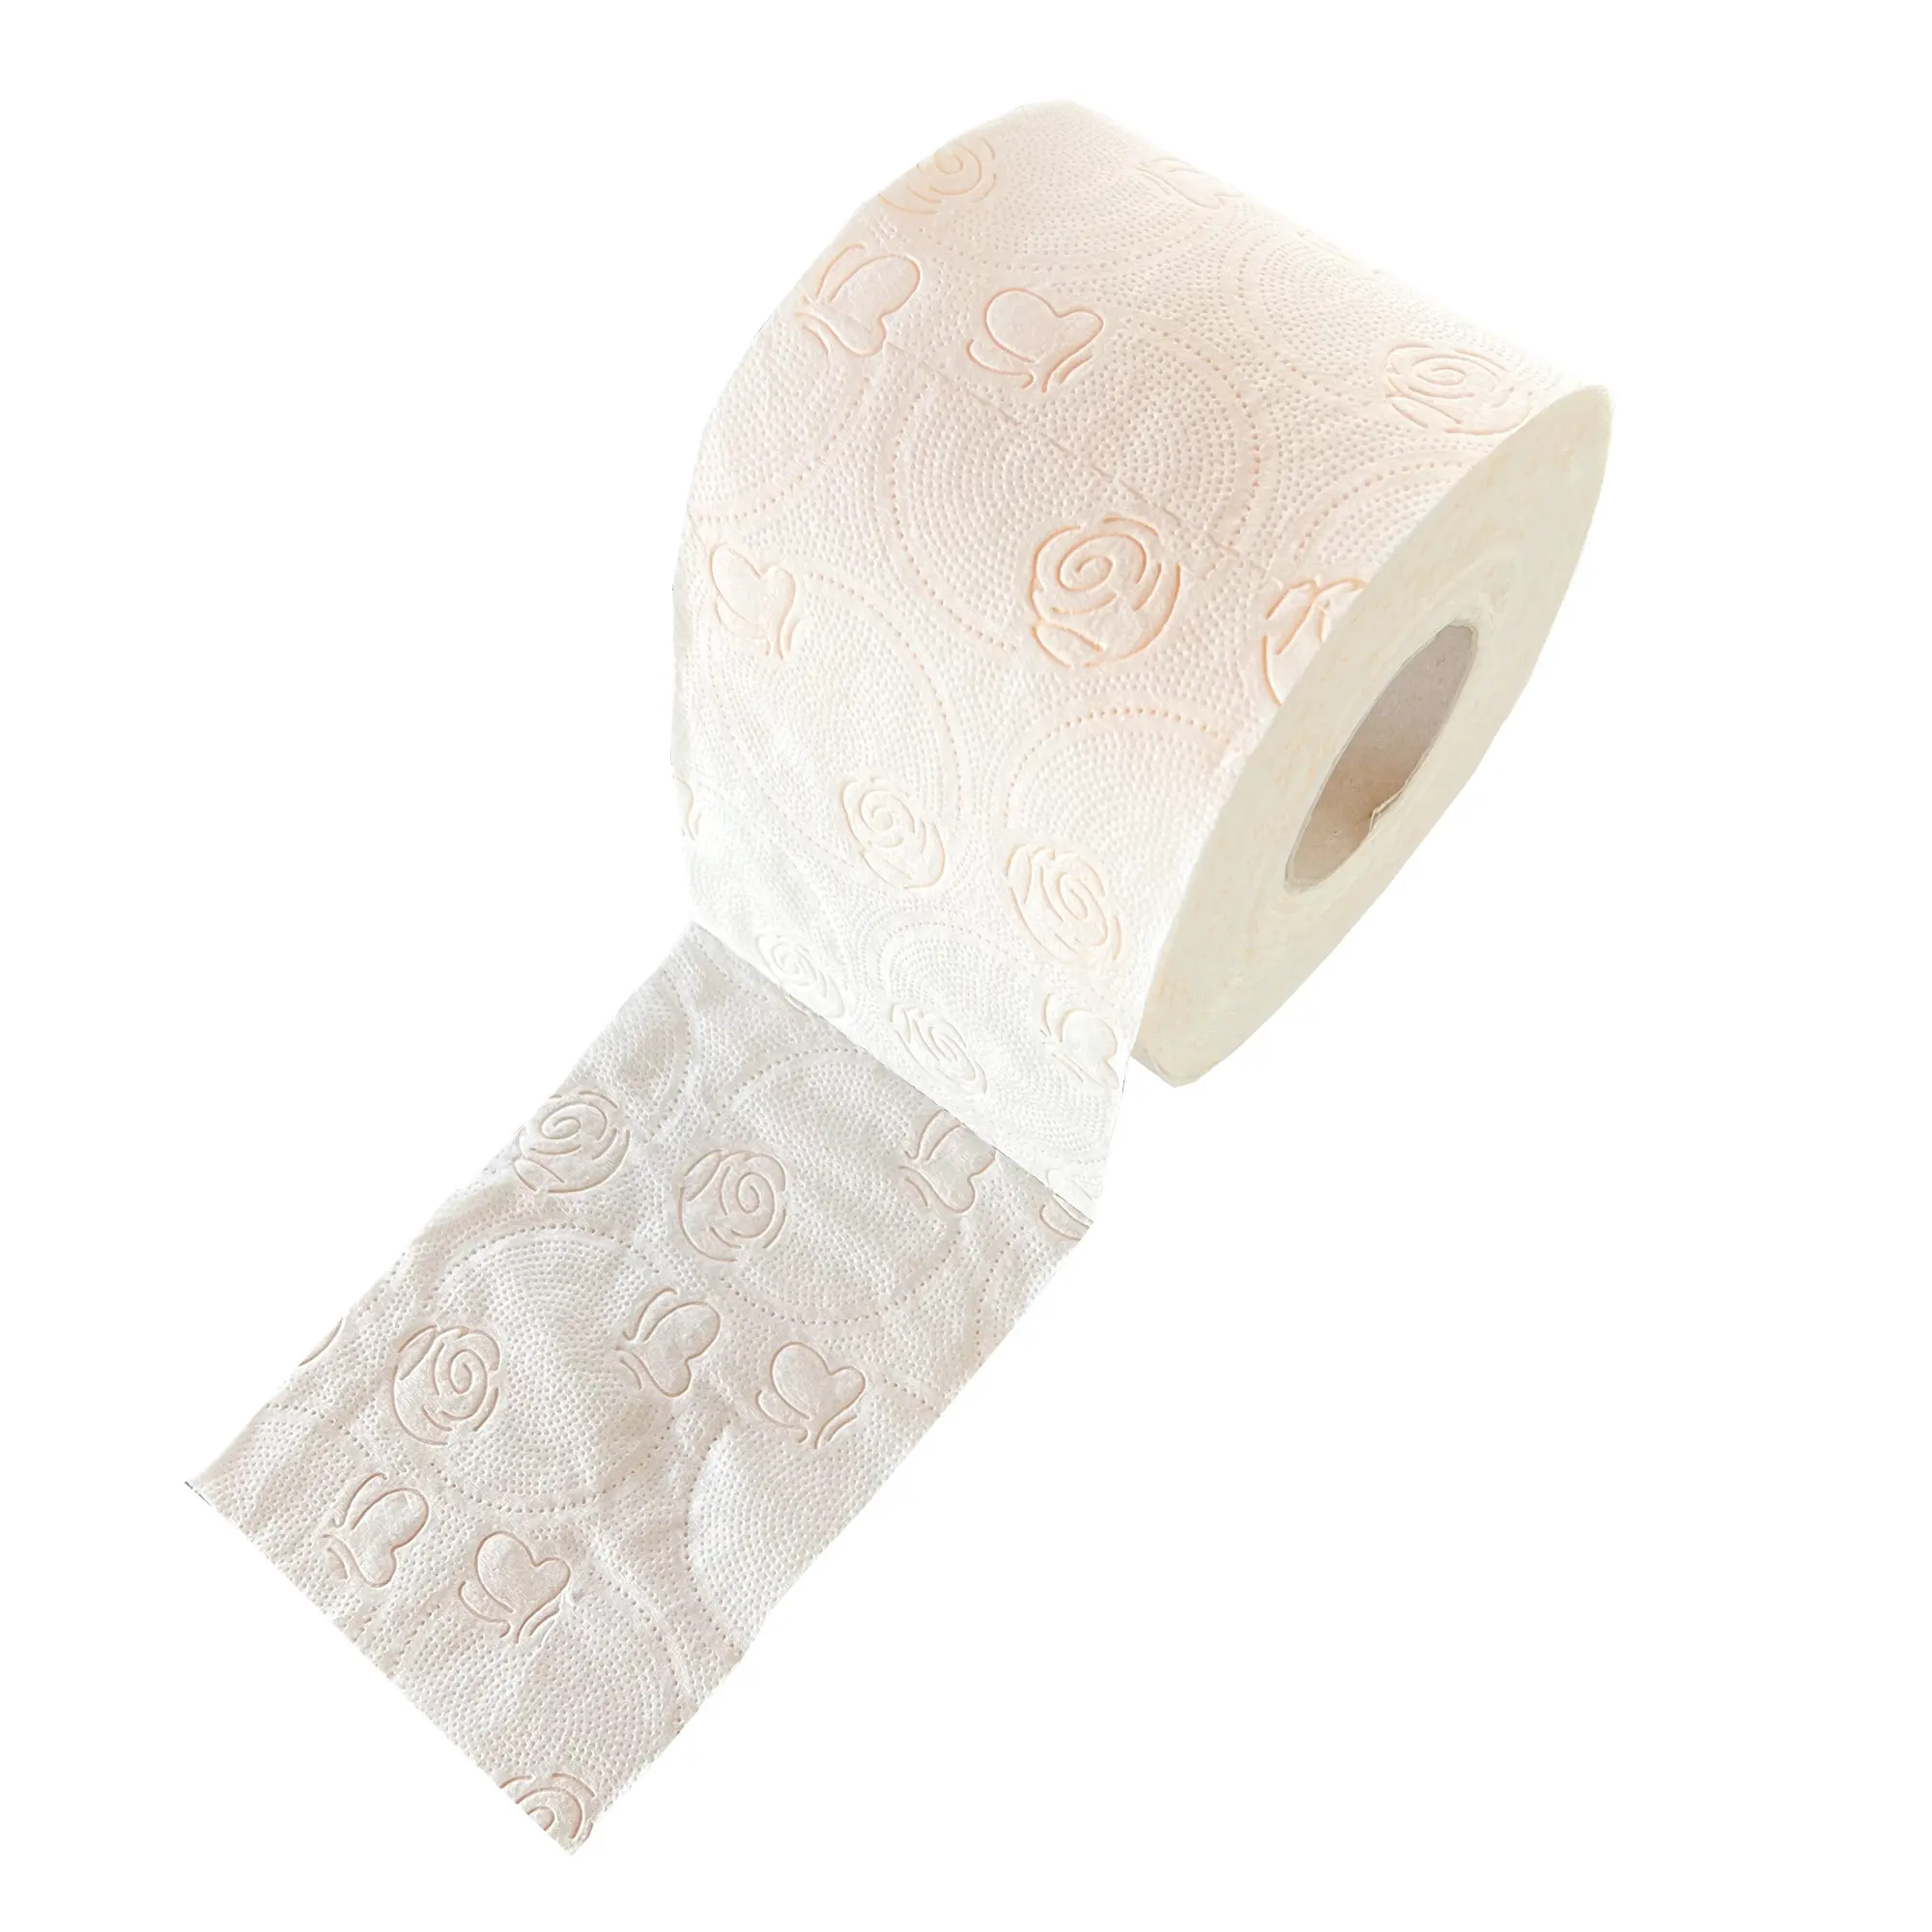 Duftendes Toilettenpapier 3-lagig, extra-weiches Luxus-Toilettenpapier mit Duft